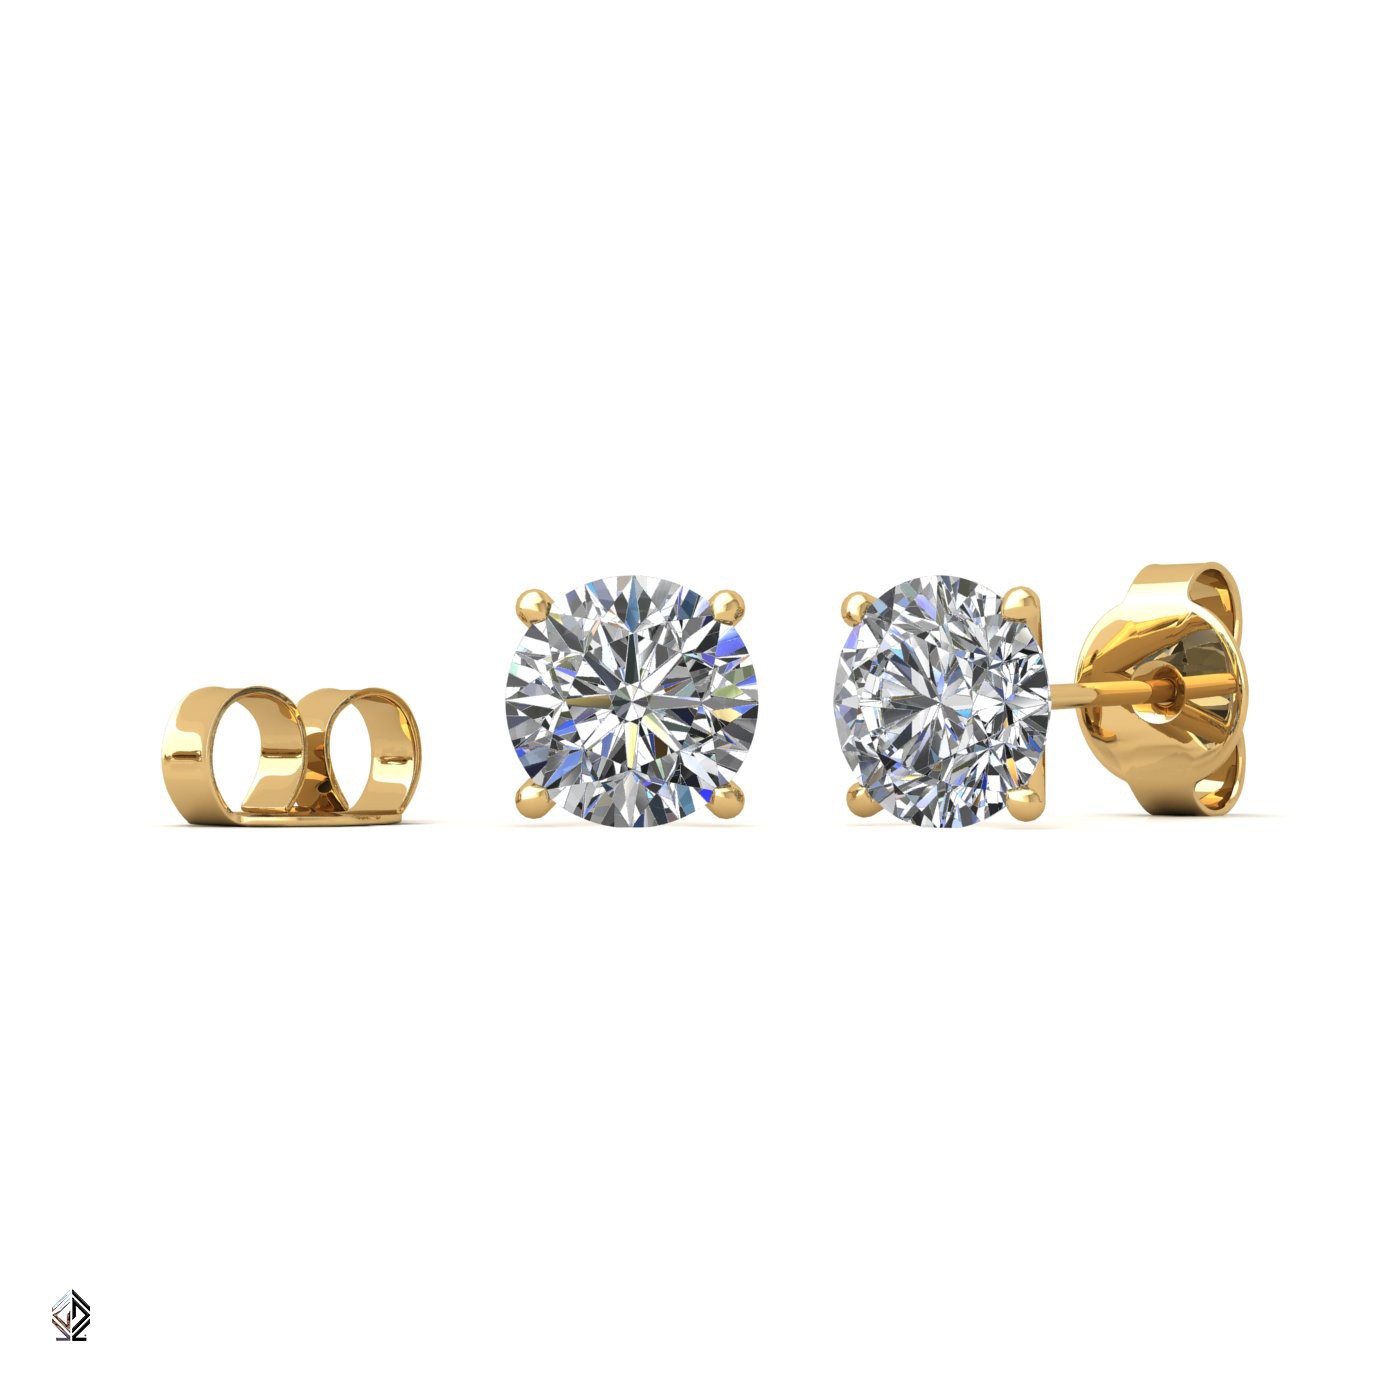 18k yellow gold 0,5 ct each (1,0 tcw) 4 prongs round cut classic diamond earring studs